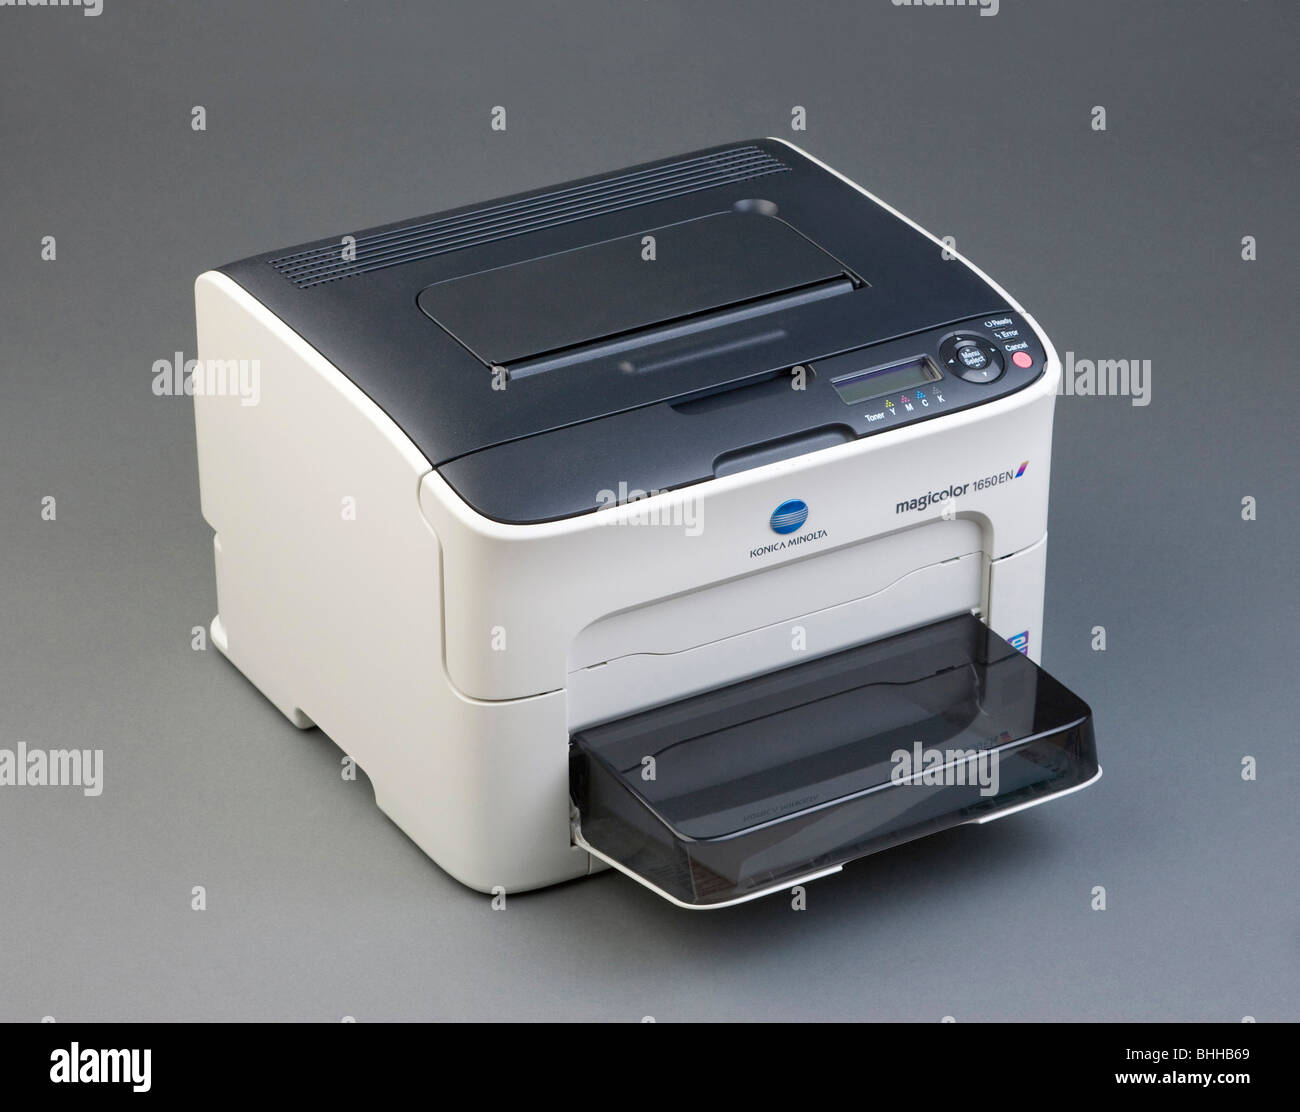 Konica Minolta Magicolor 1650EN imprimante laser couleur Photo Stock - Alamy